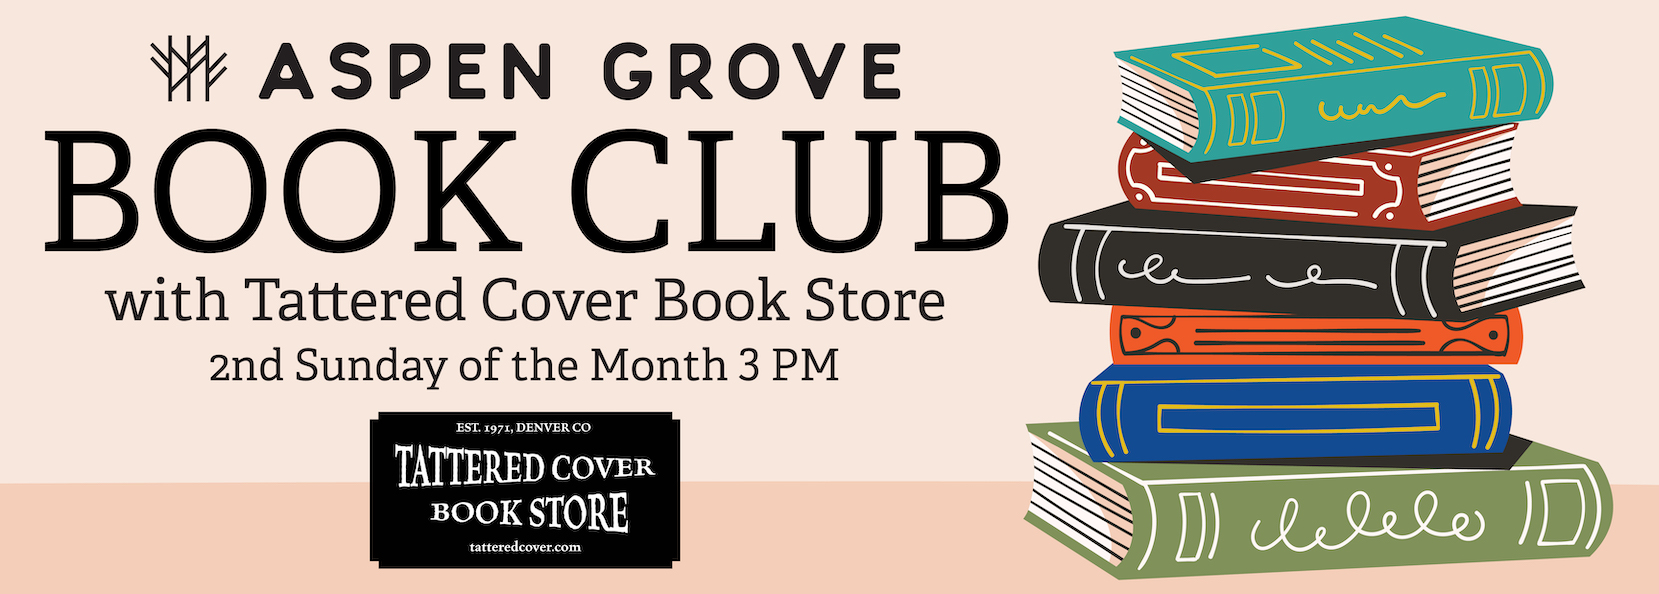 Aspen Grove Book Club AUGUST